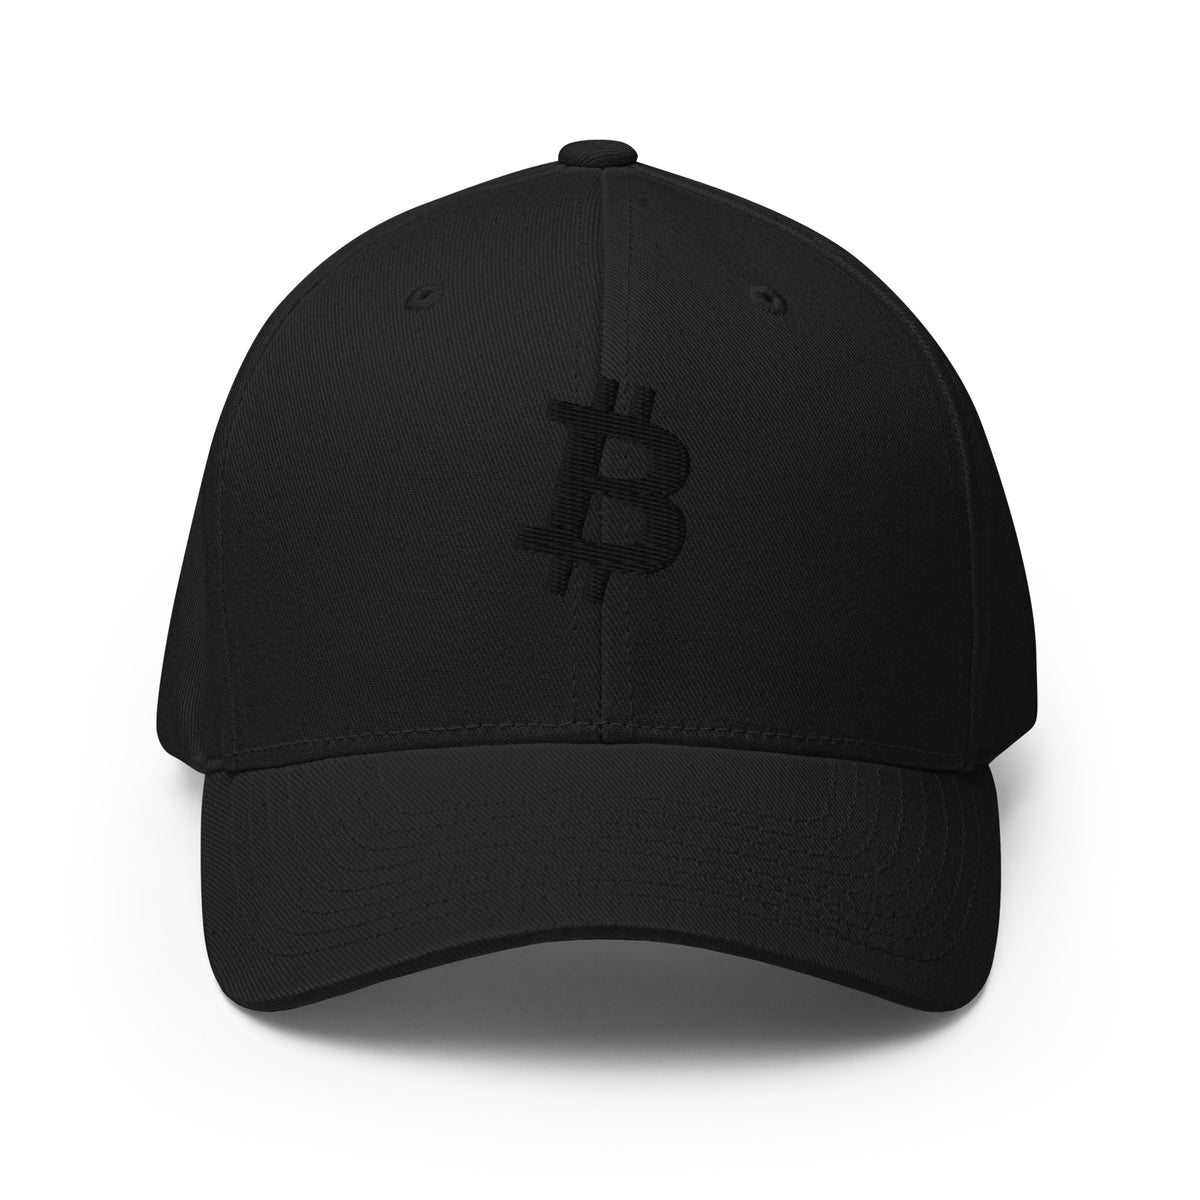 Bitcoin B (Black Embroidery) Flexfit Hat - fomo21